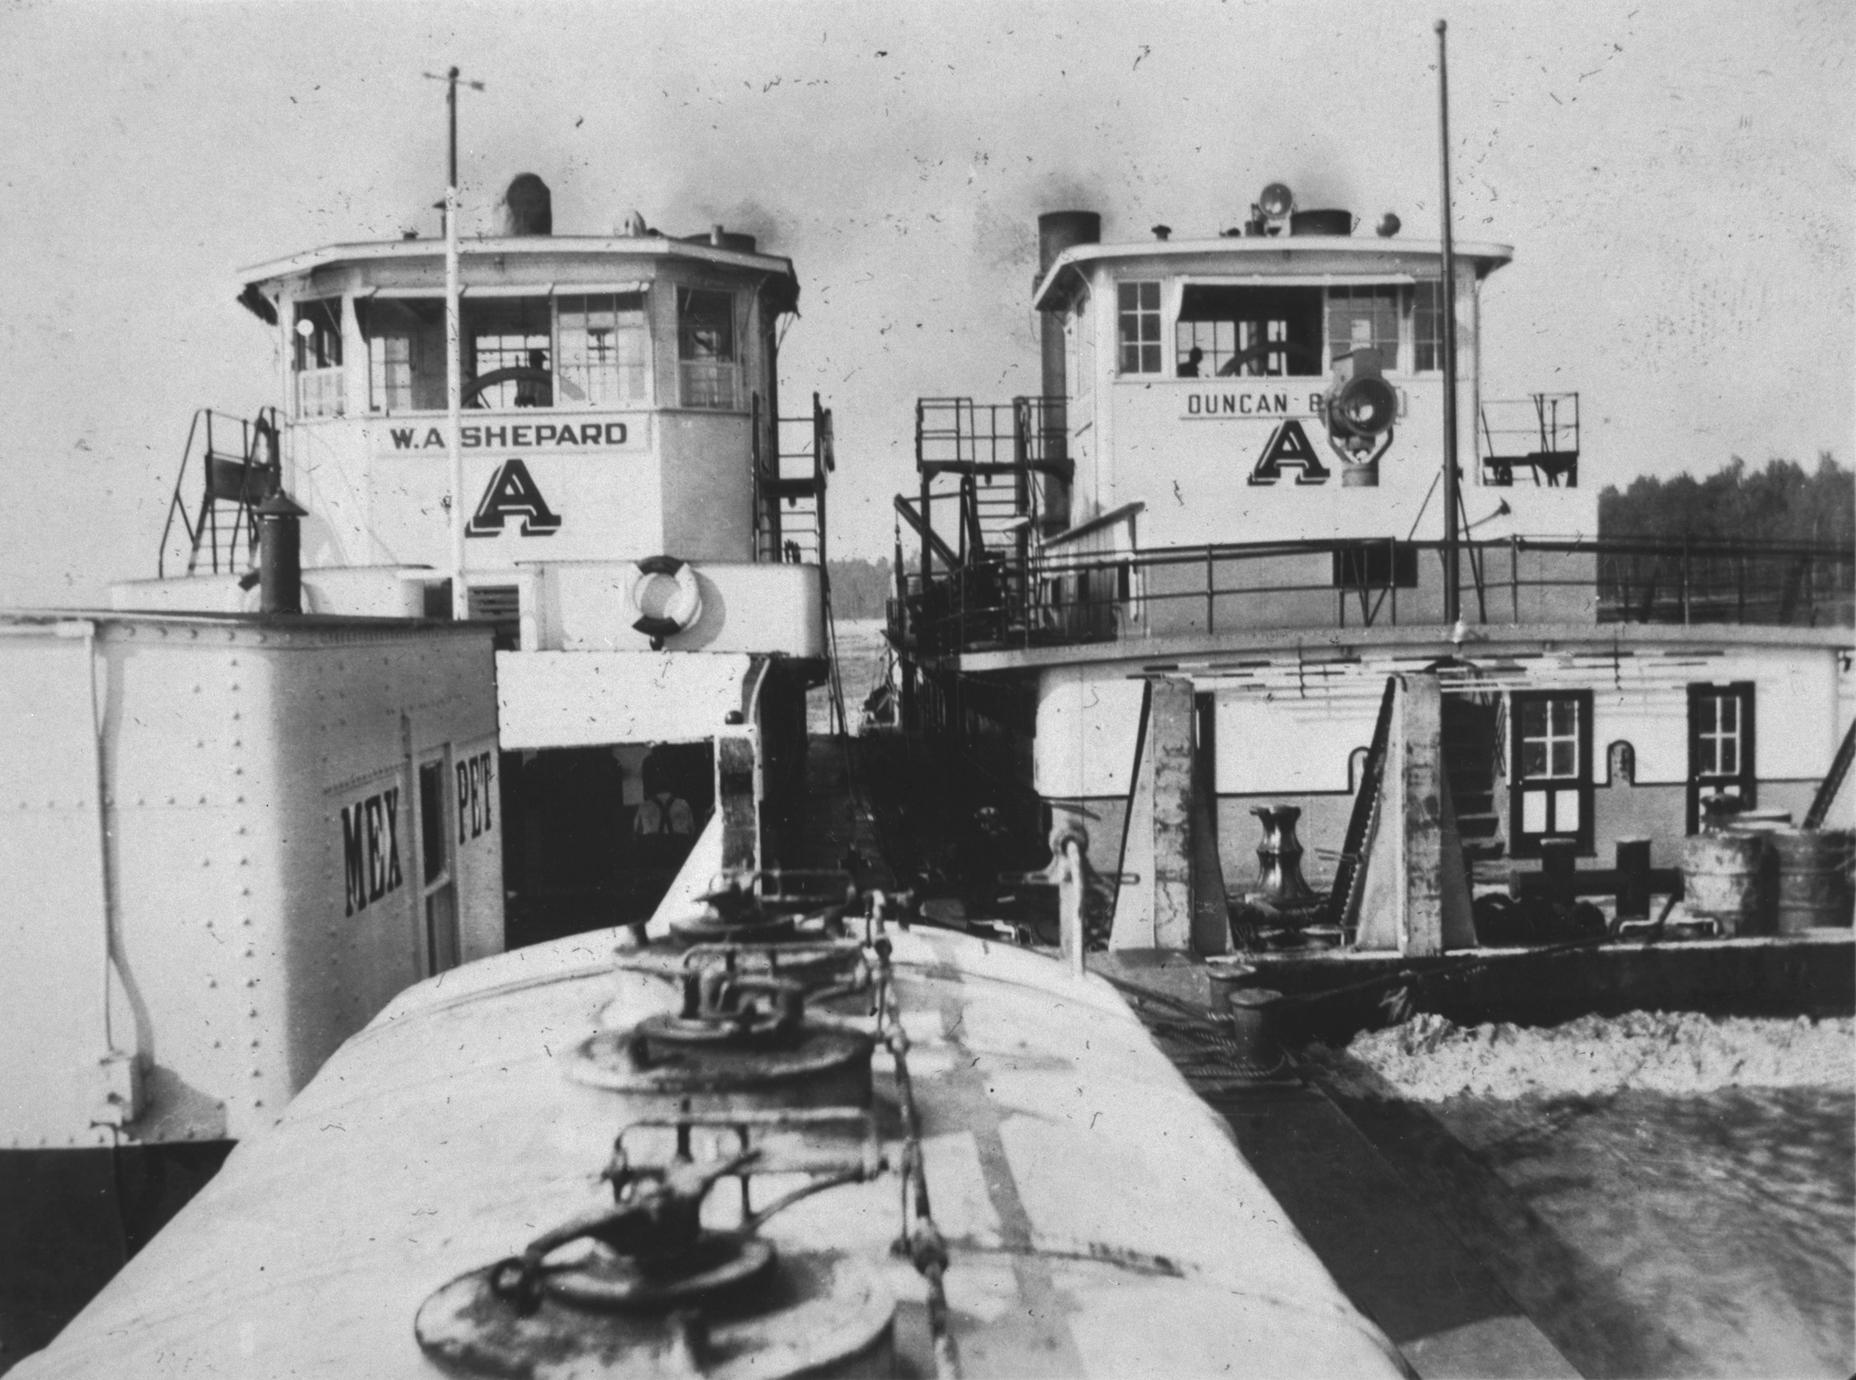 W. A. Shepard (Towboat, circa 1945)